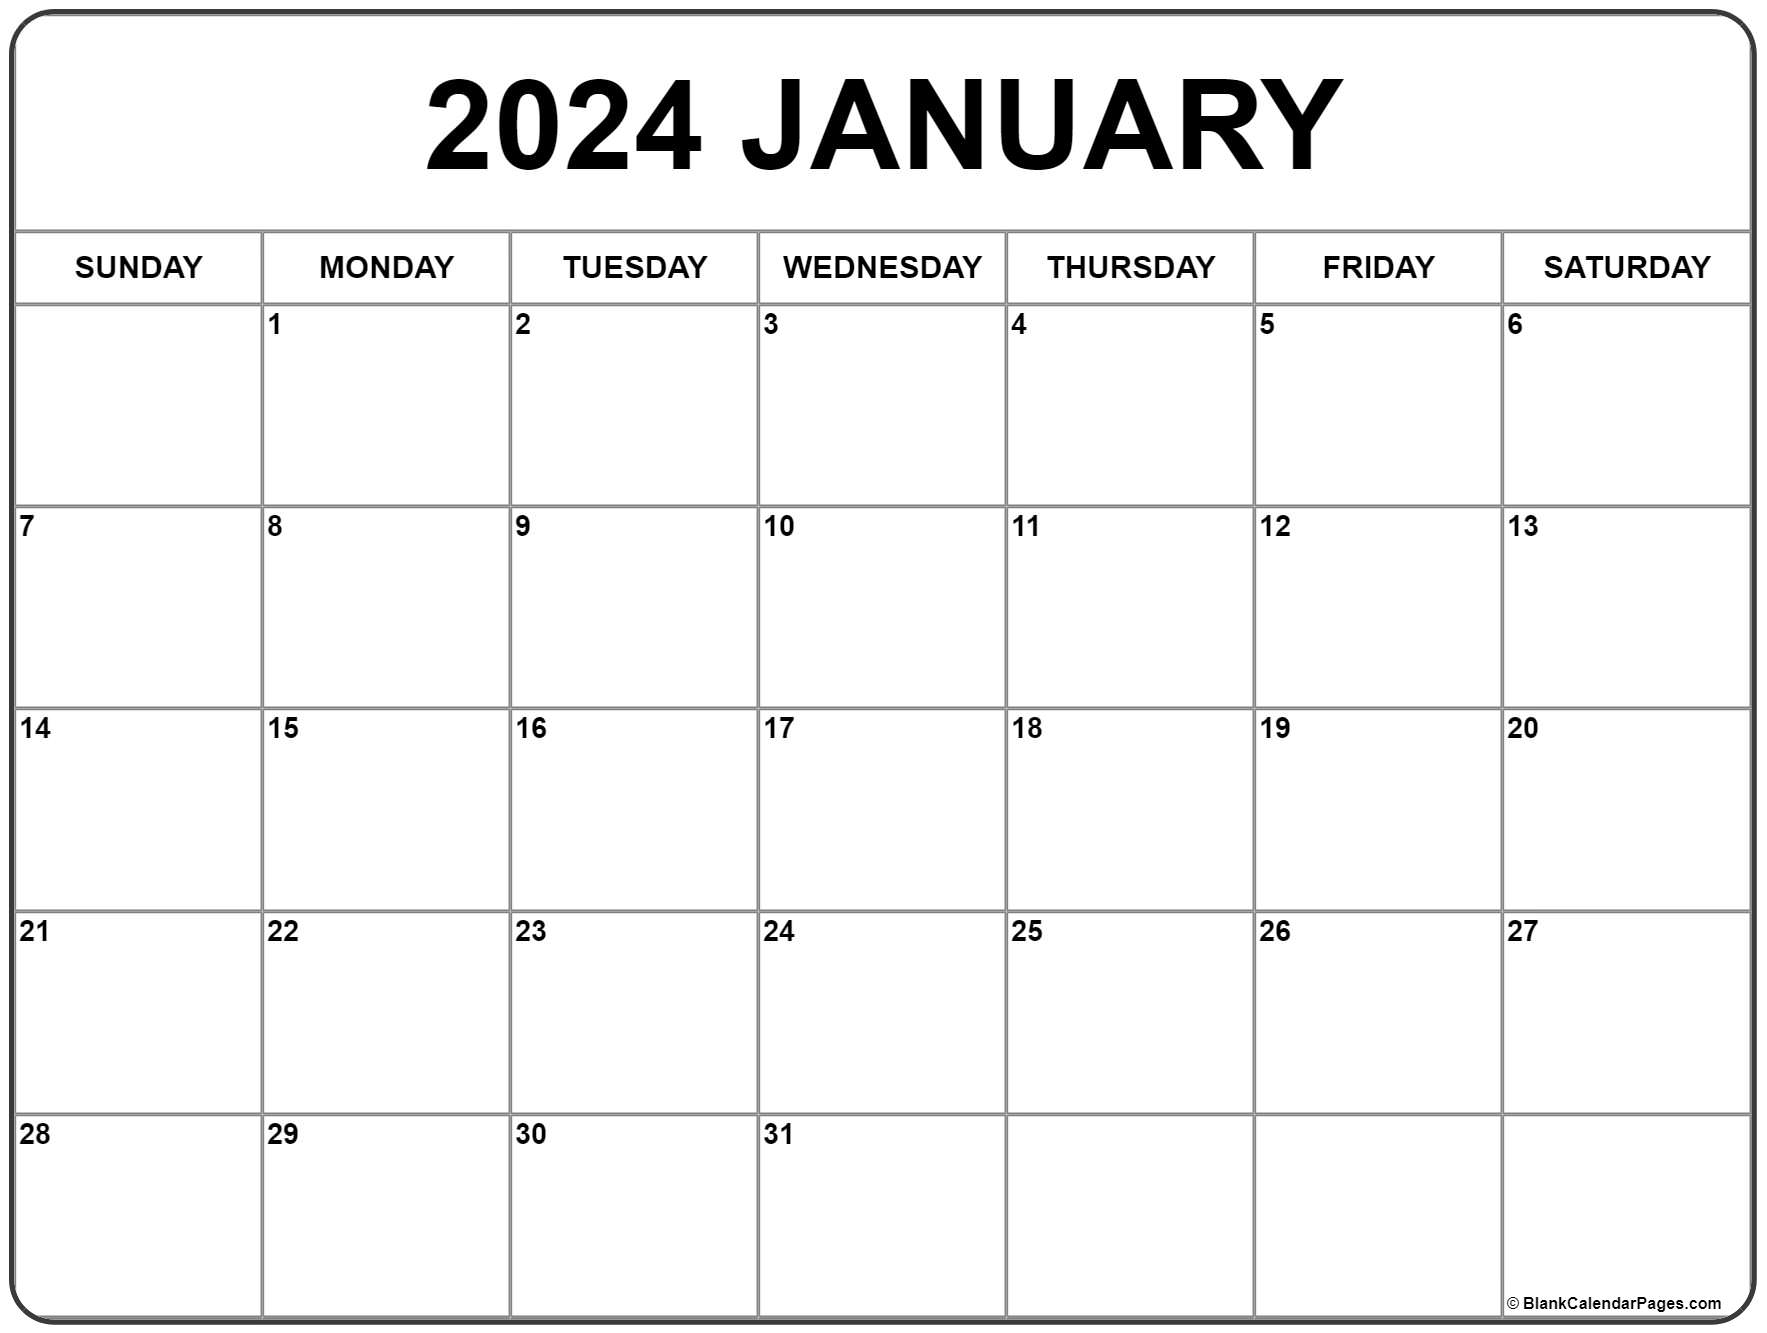 January 2021 calendar | free printable monthly calendars